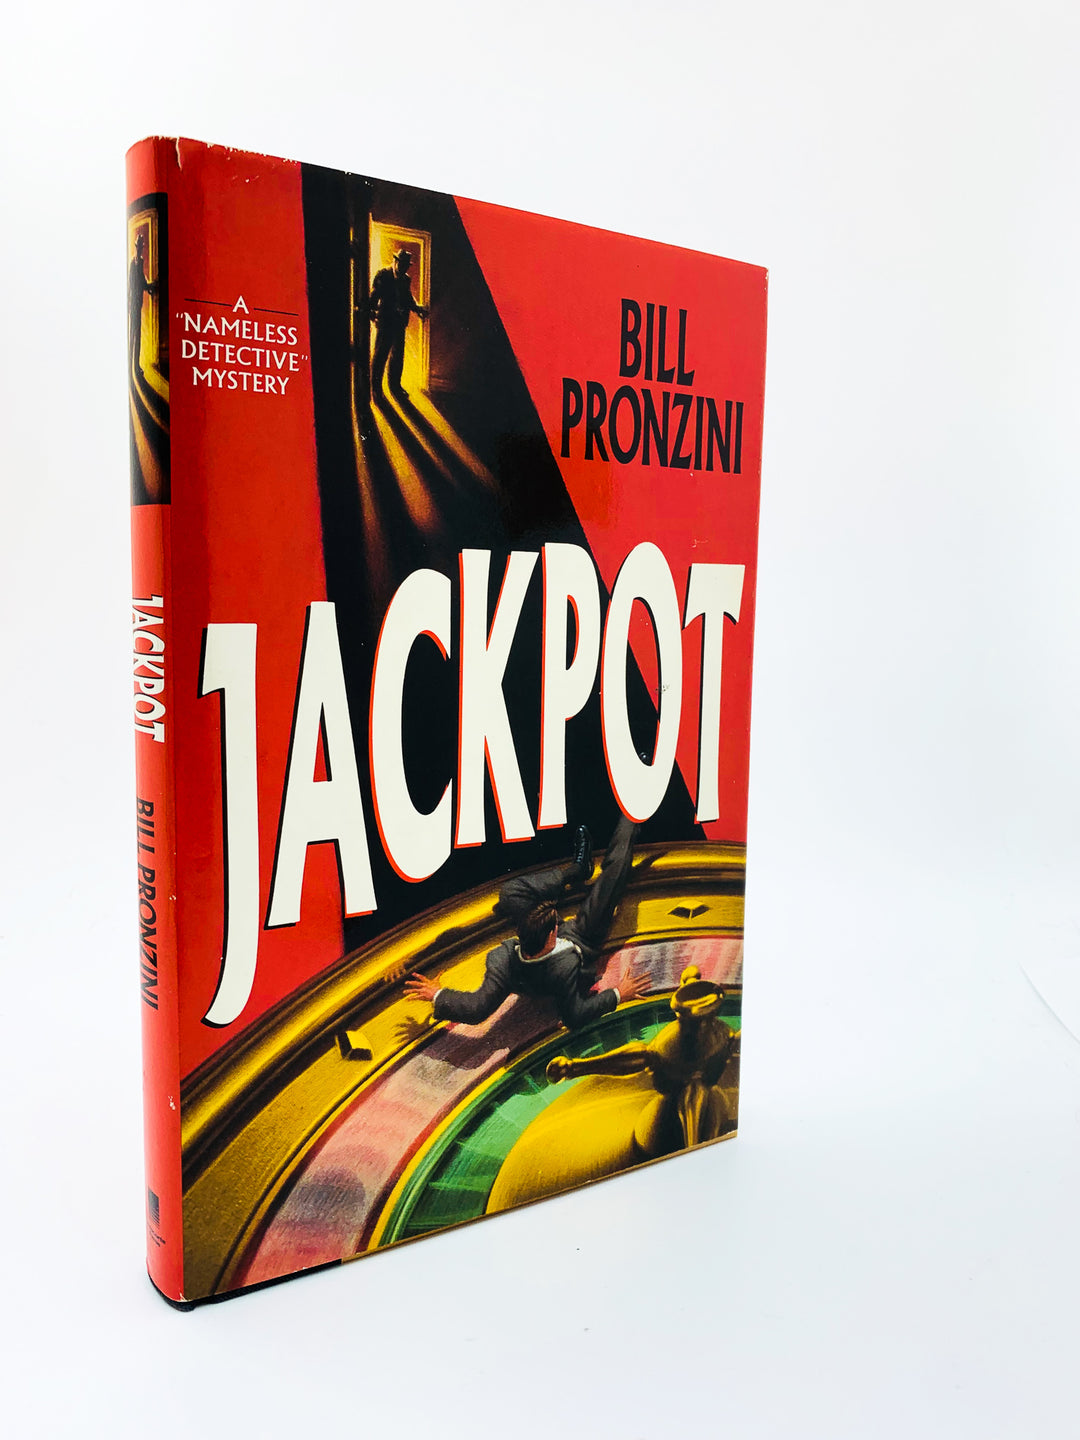 Pronzini, Bill - Jackpot - SIGNED | front cover